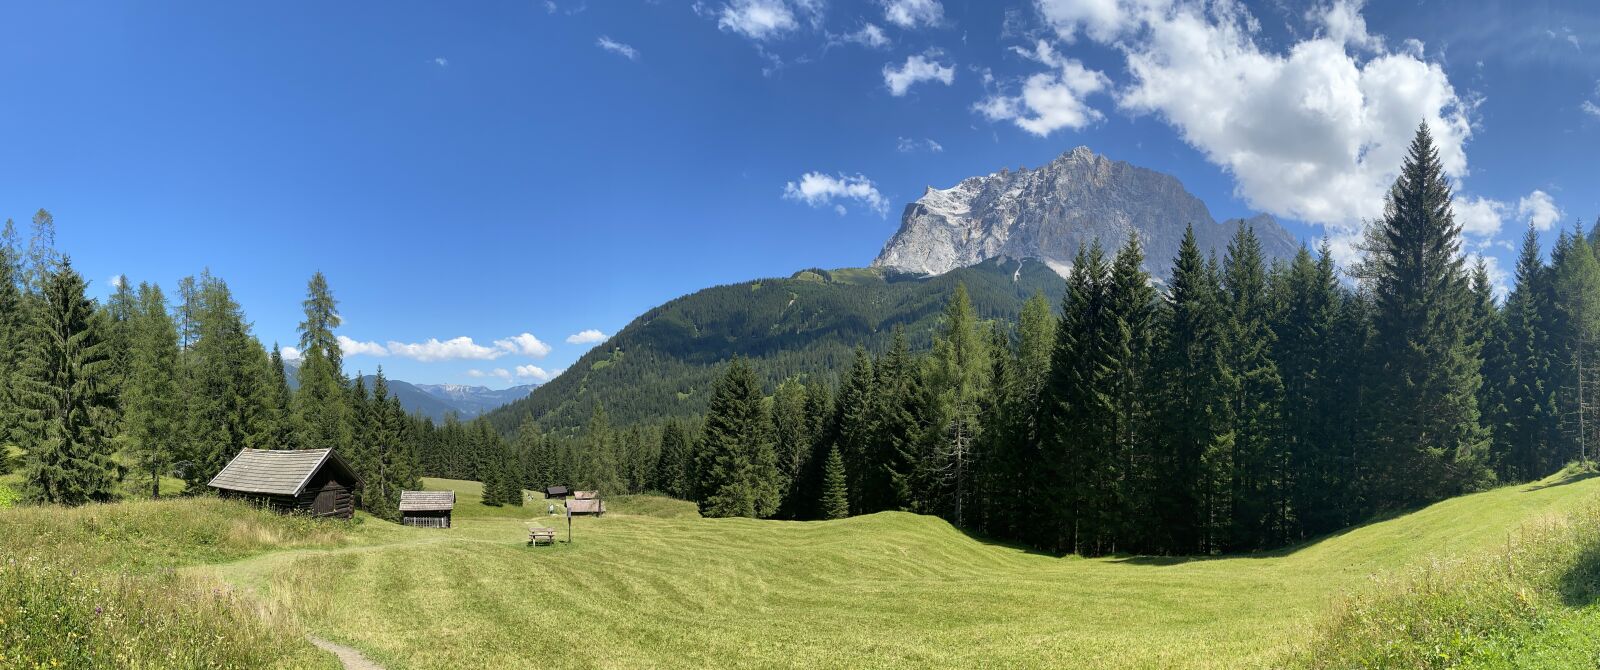 iPhone 11 Pro Max back camera 4.25mm f/1.8 sample photo. Alpine, mountains, landscape photography